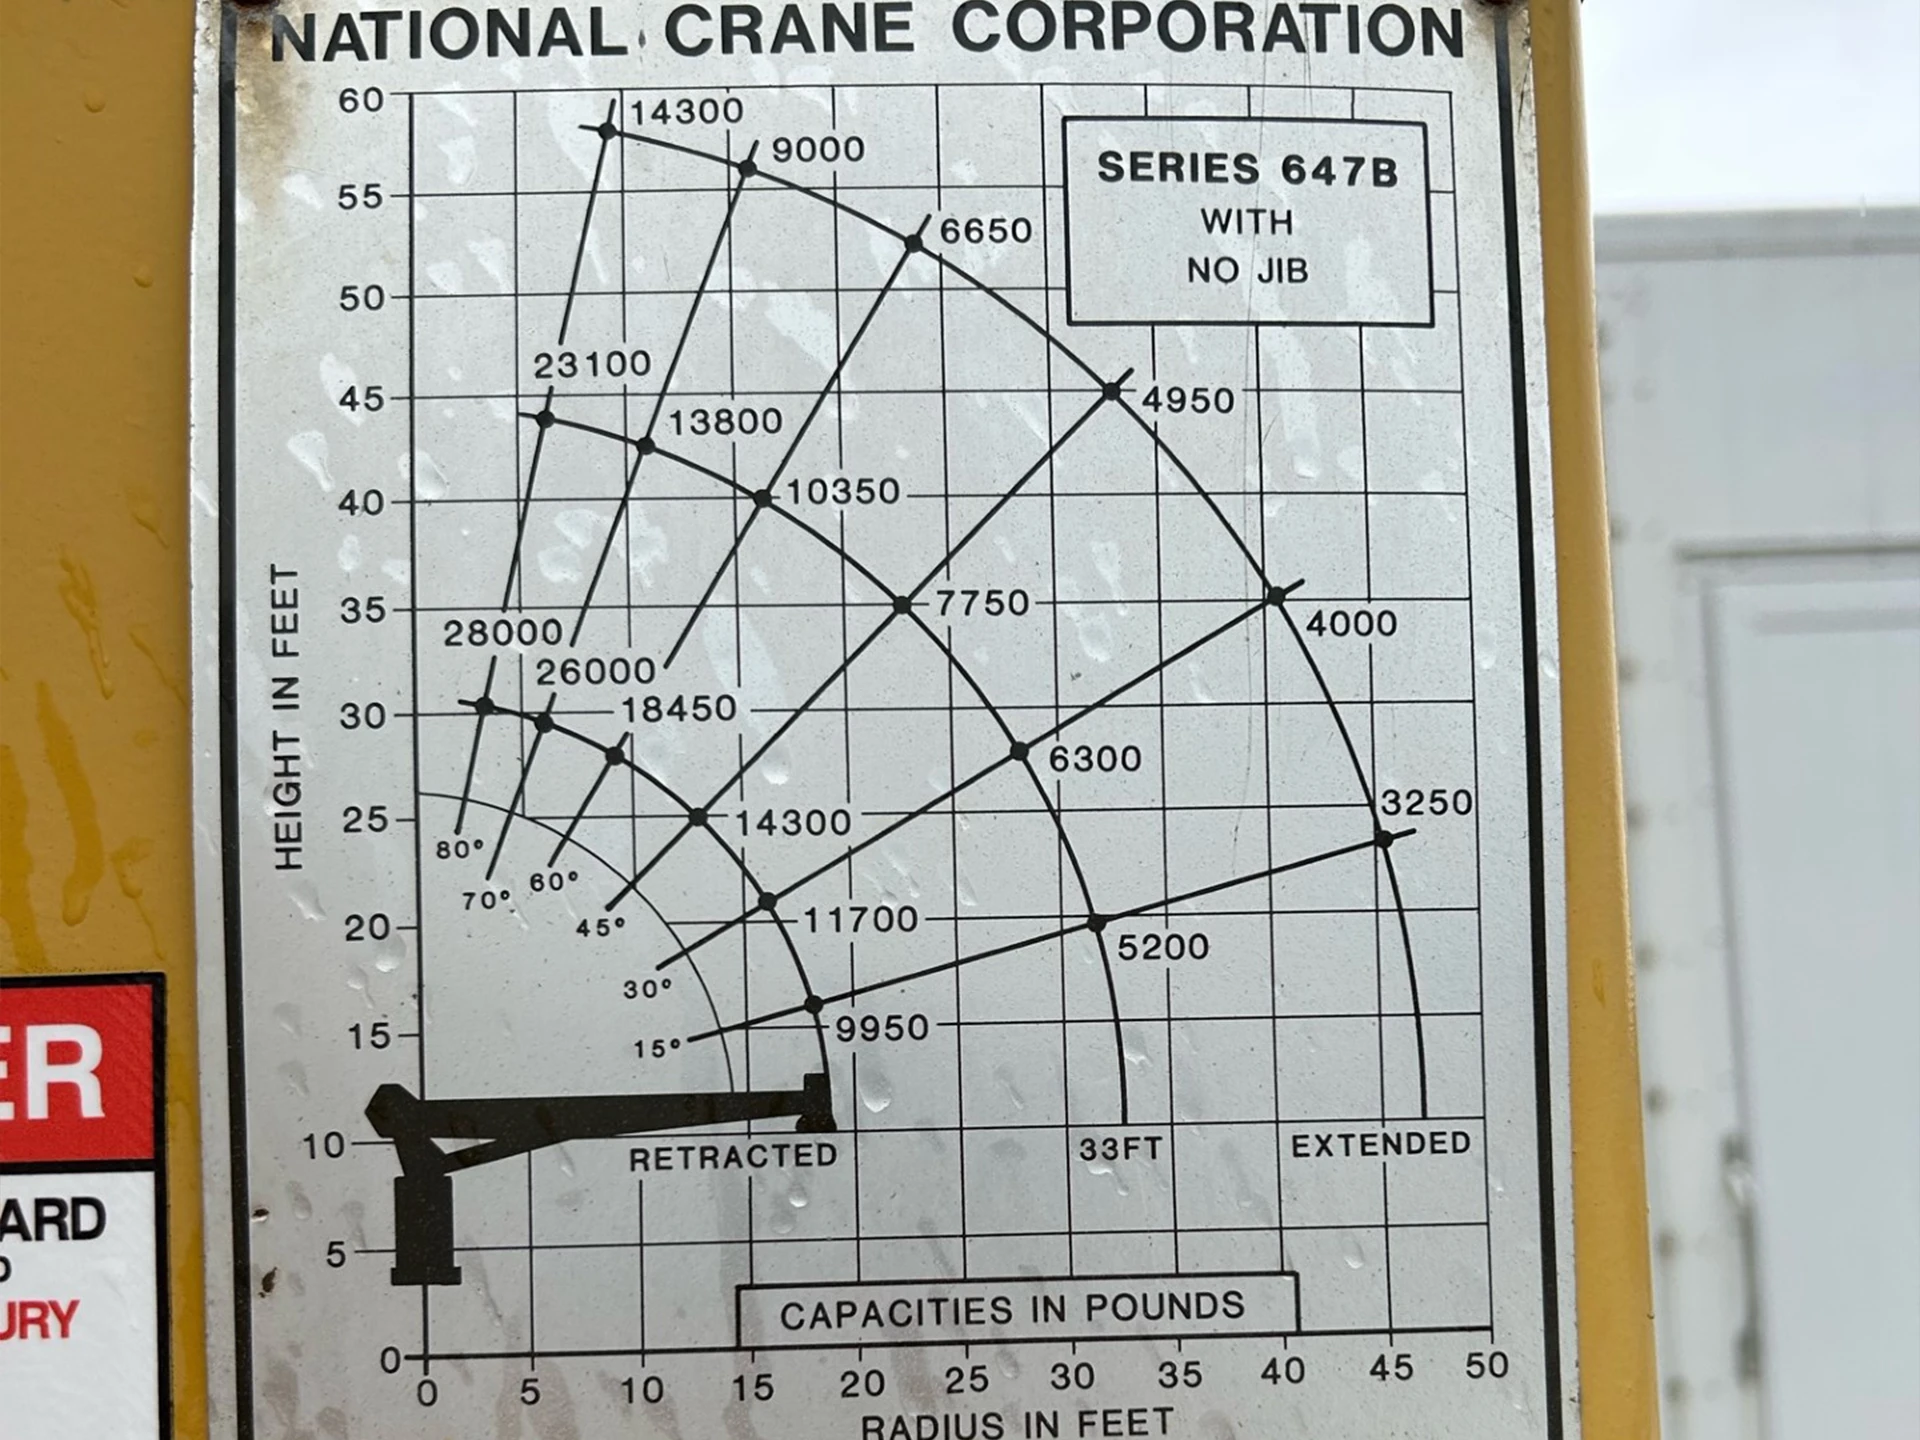 Western Star Crane Capacity